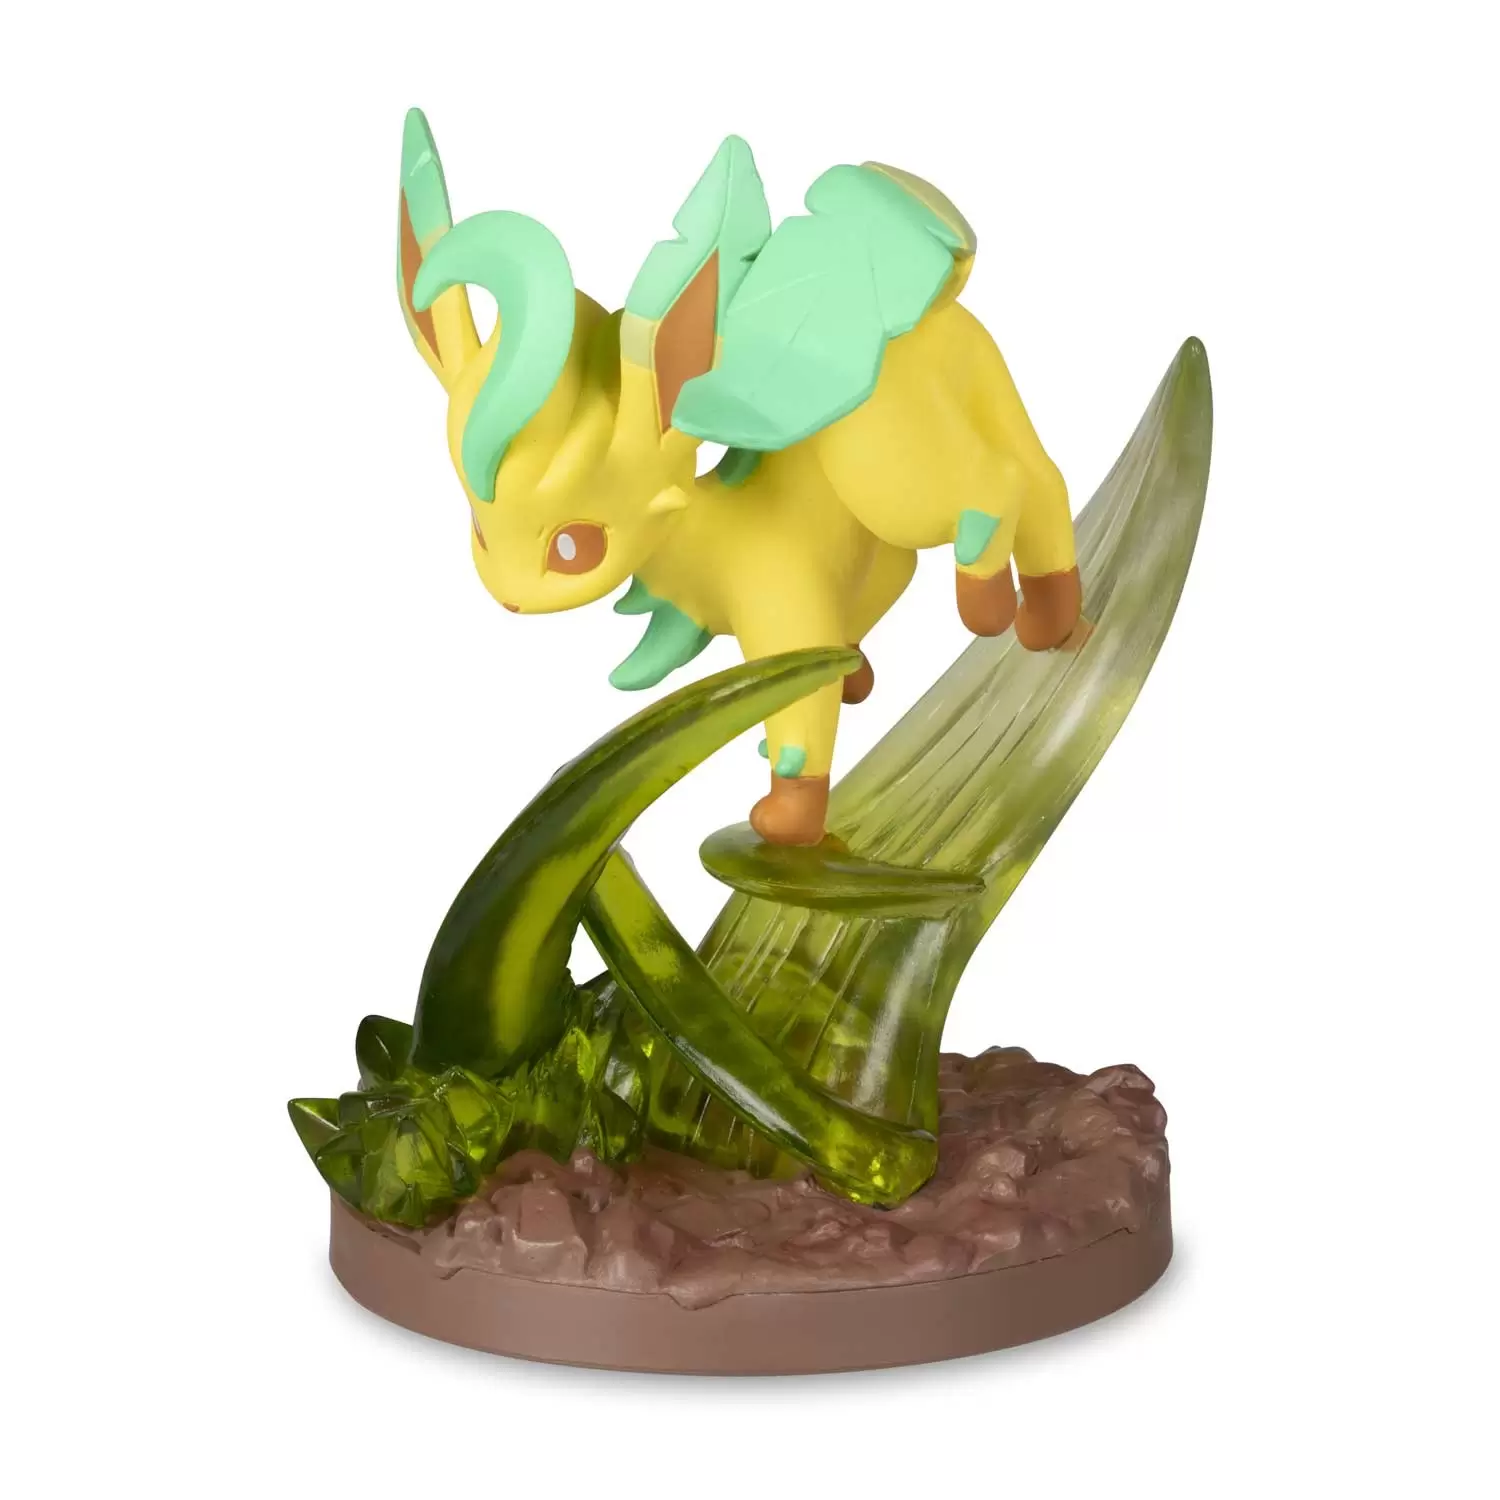 Pokémon Gallery Figures - Leafeon: Leaf Blade